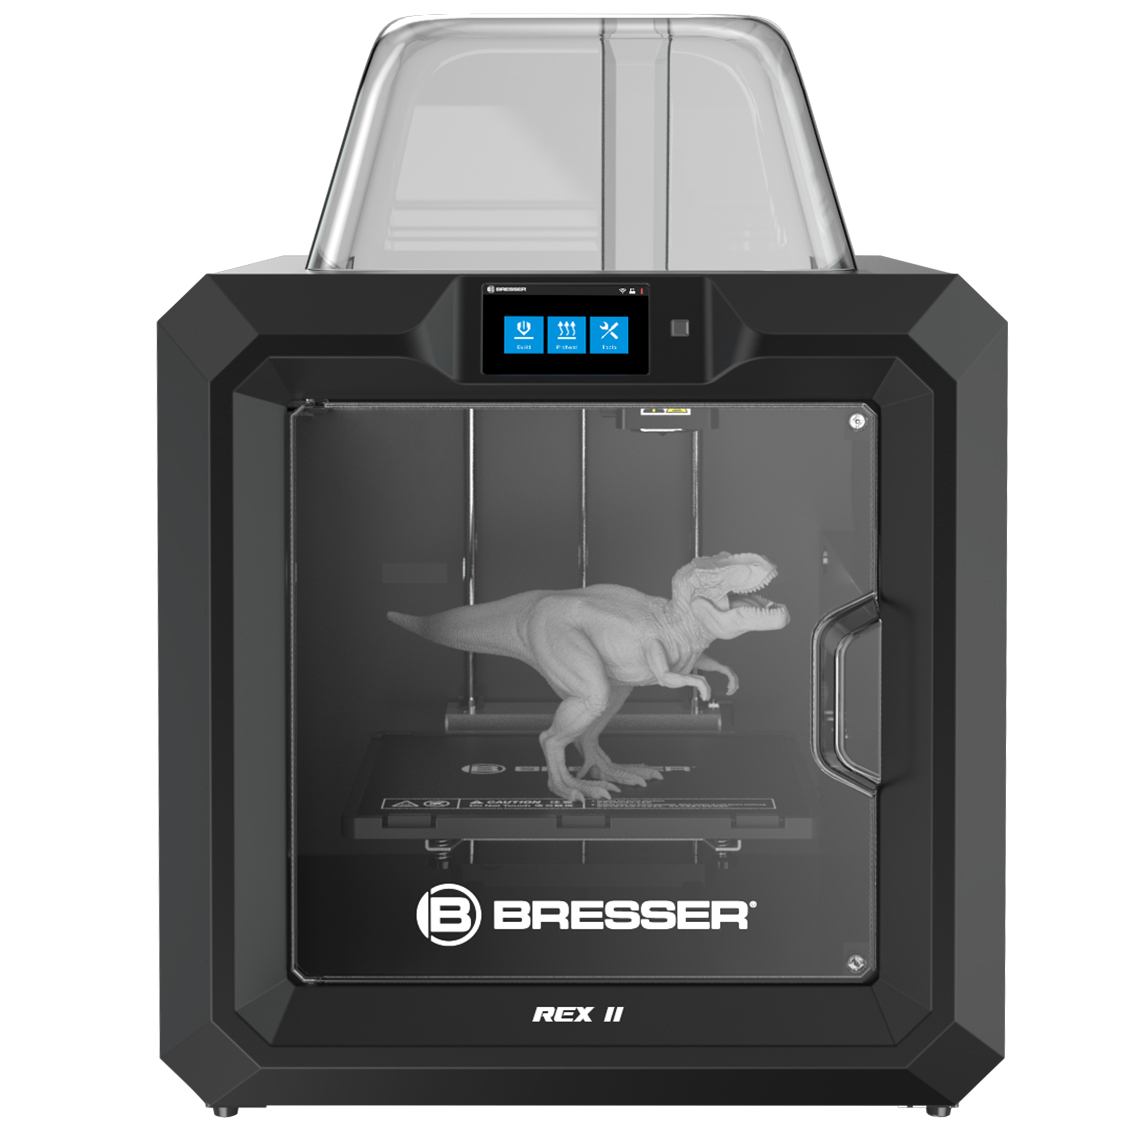 Impresora 3D BRESSER REX II WIFI